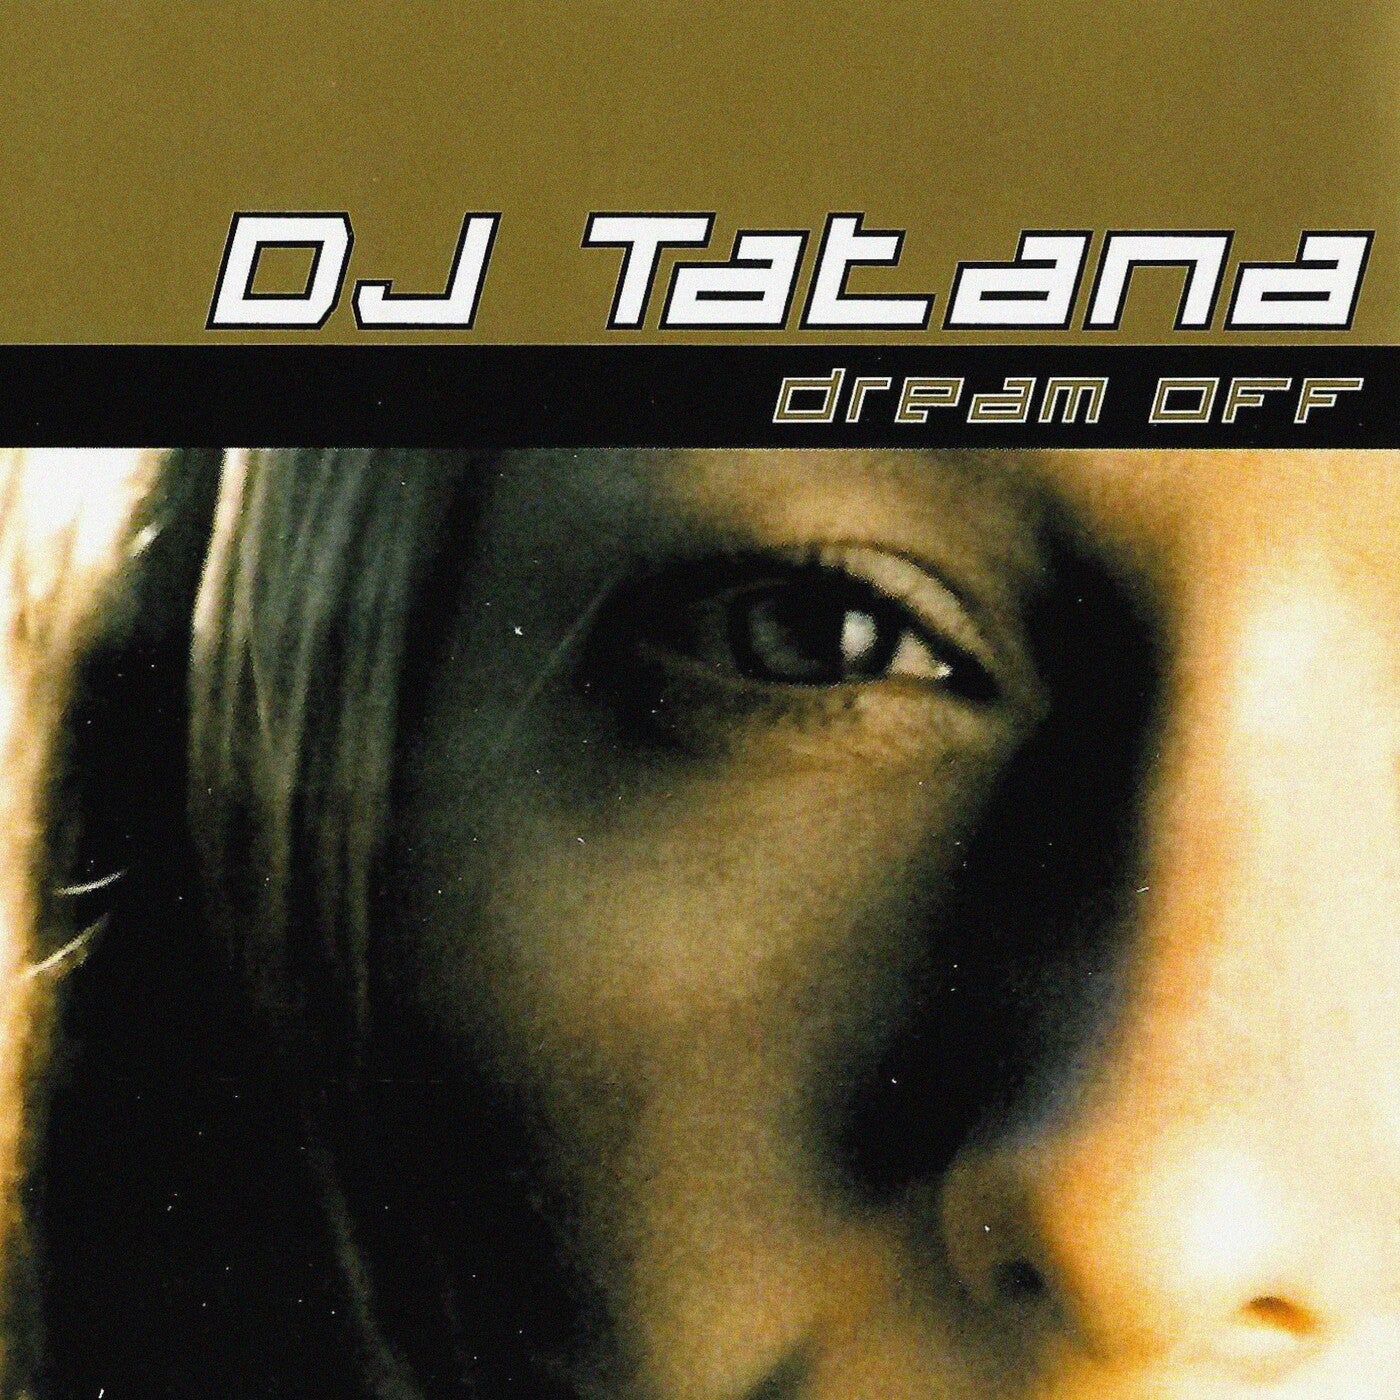 DJ Tatana. Dream off альбом.